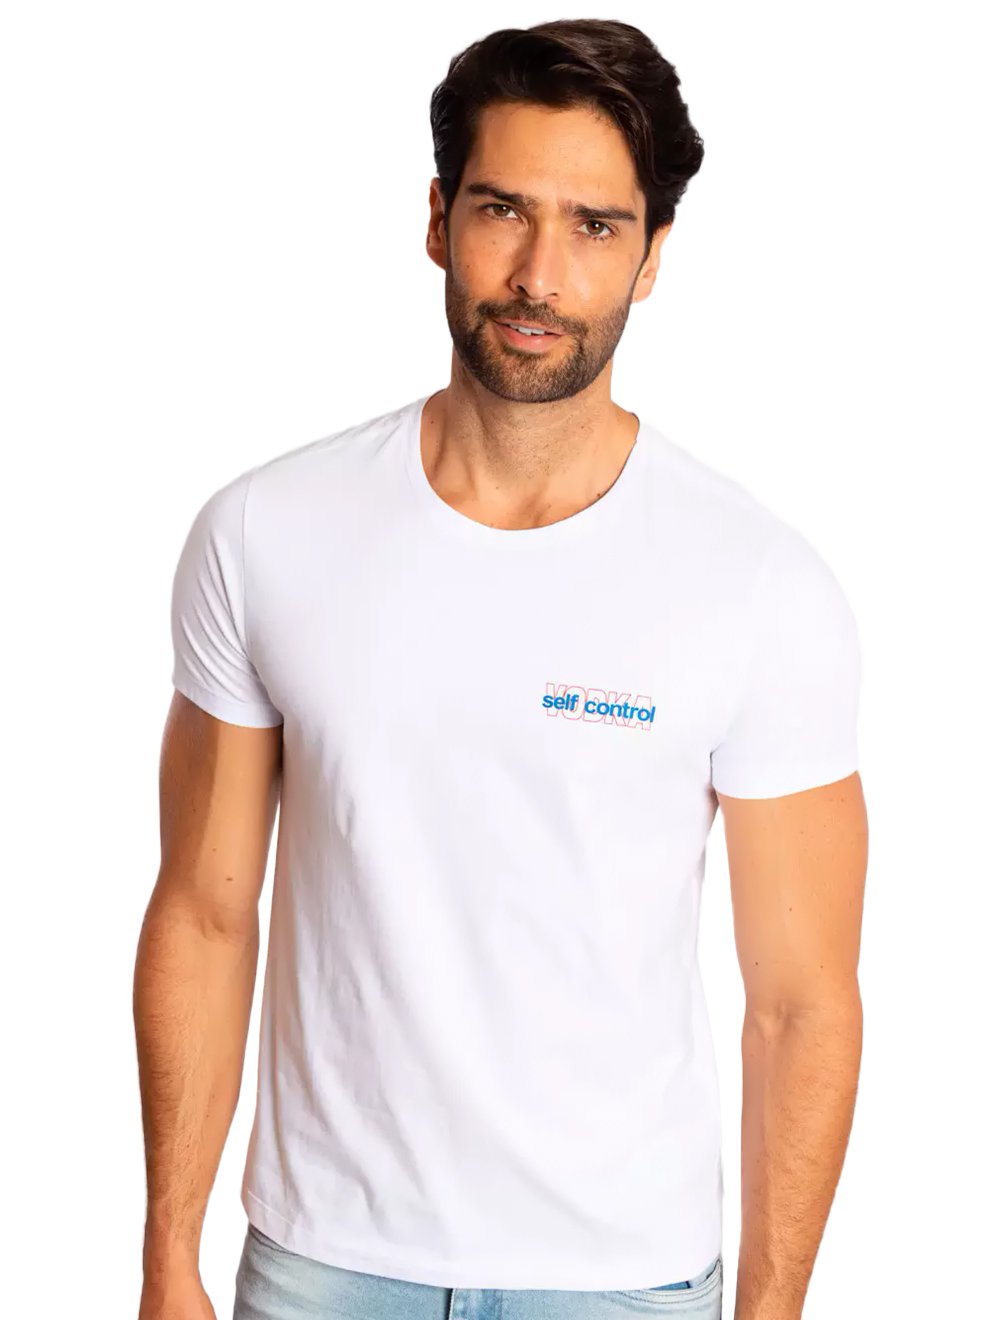 Camiseta Sergio K Masculina Self Control Branca